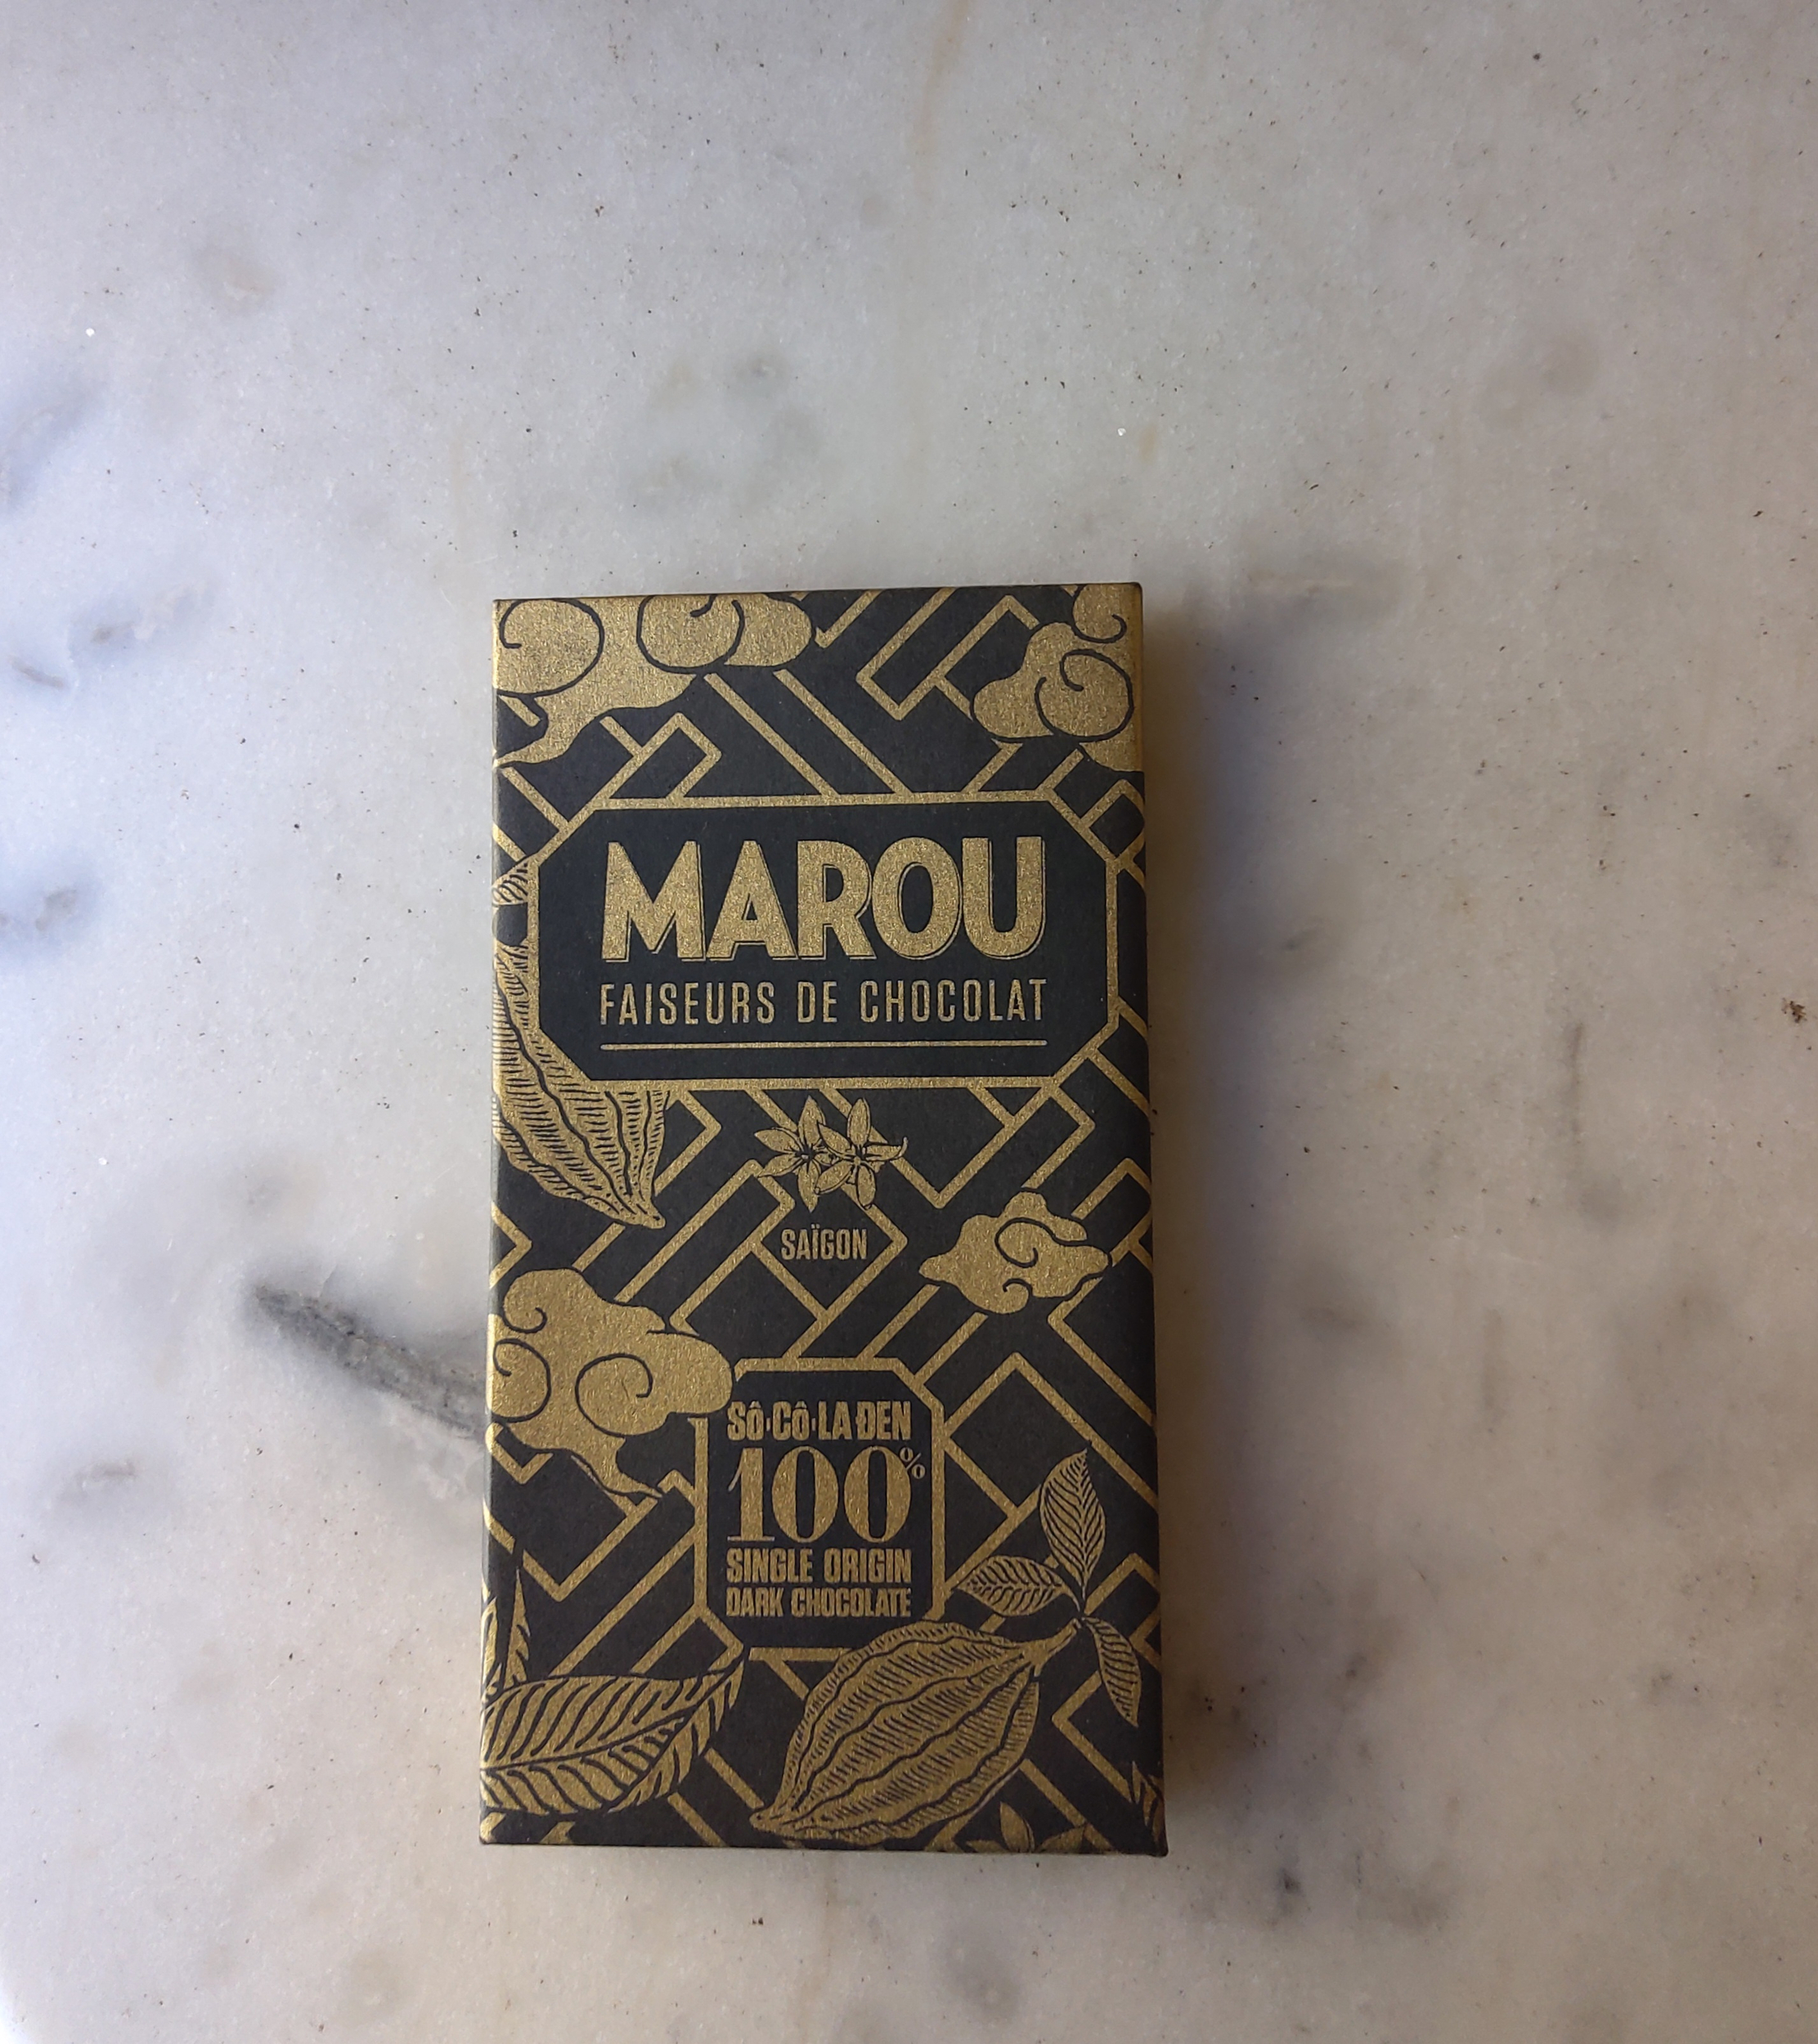 Choclolat Marou 100% lacigale-shop.fr